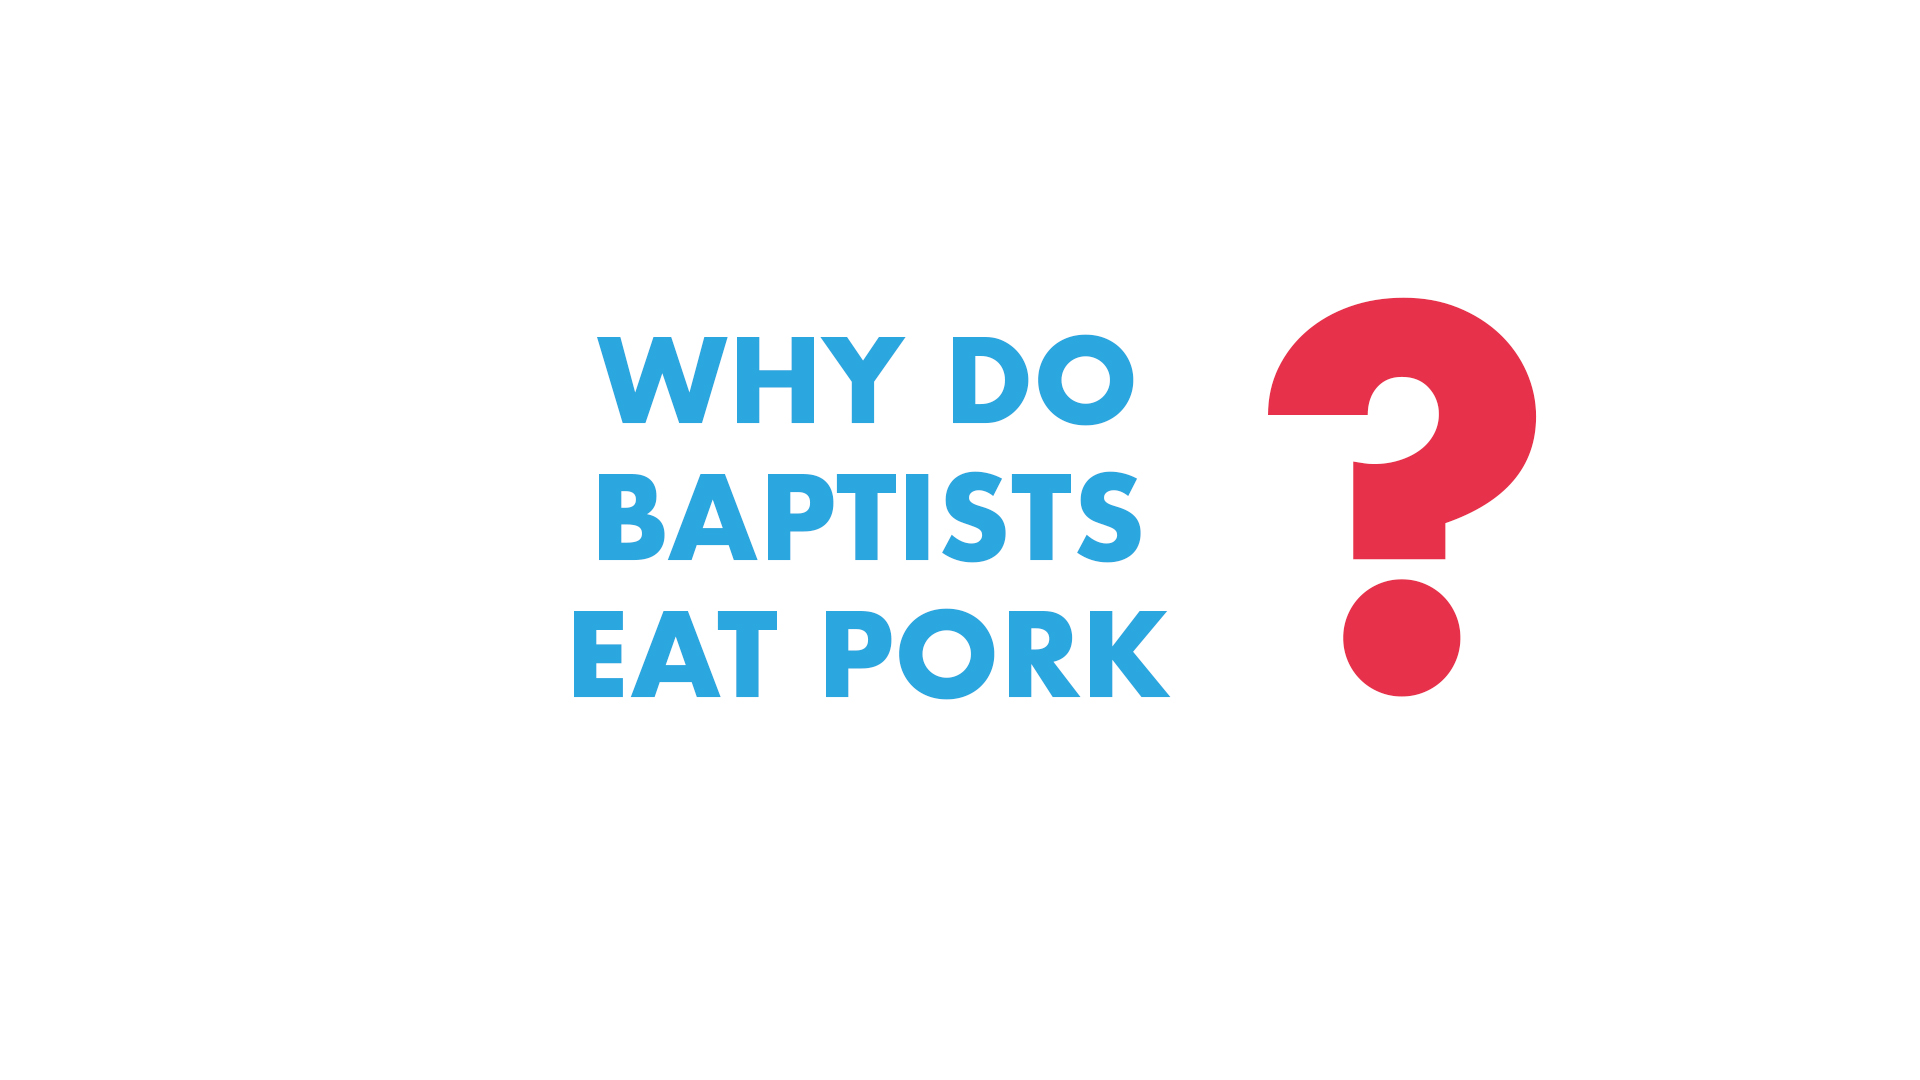 Why do Baptists Eat Pork?